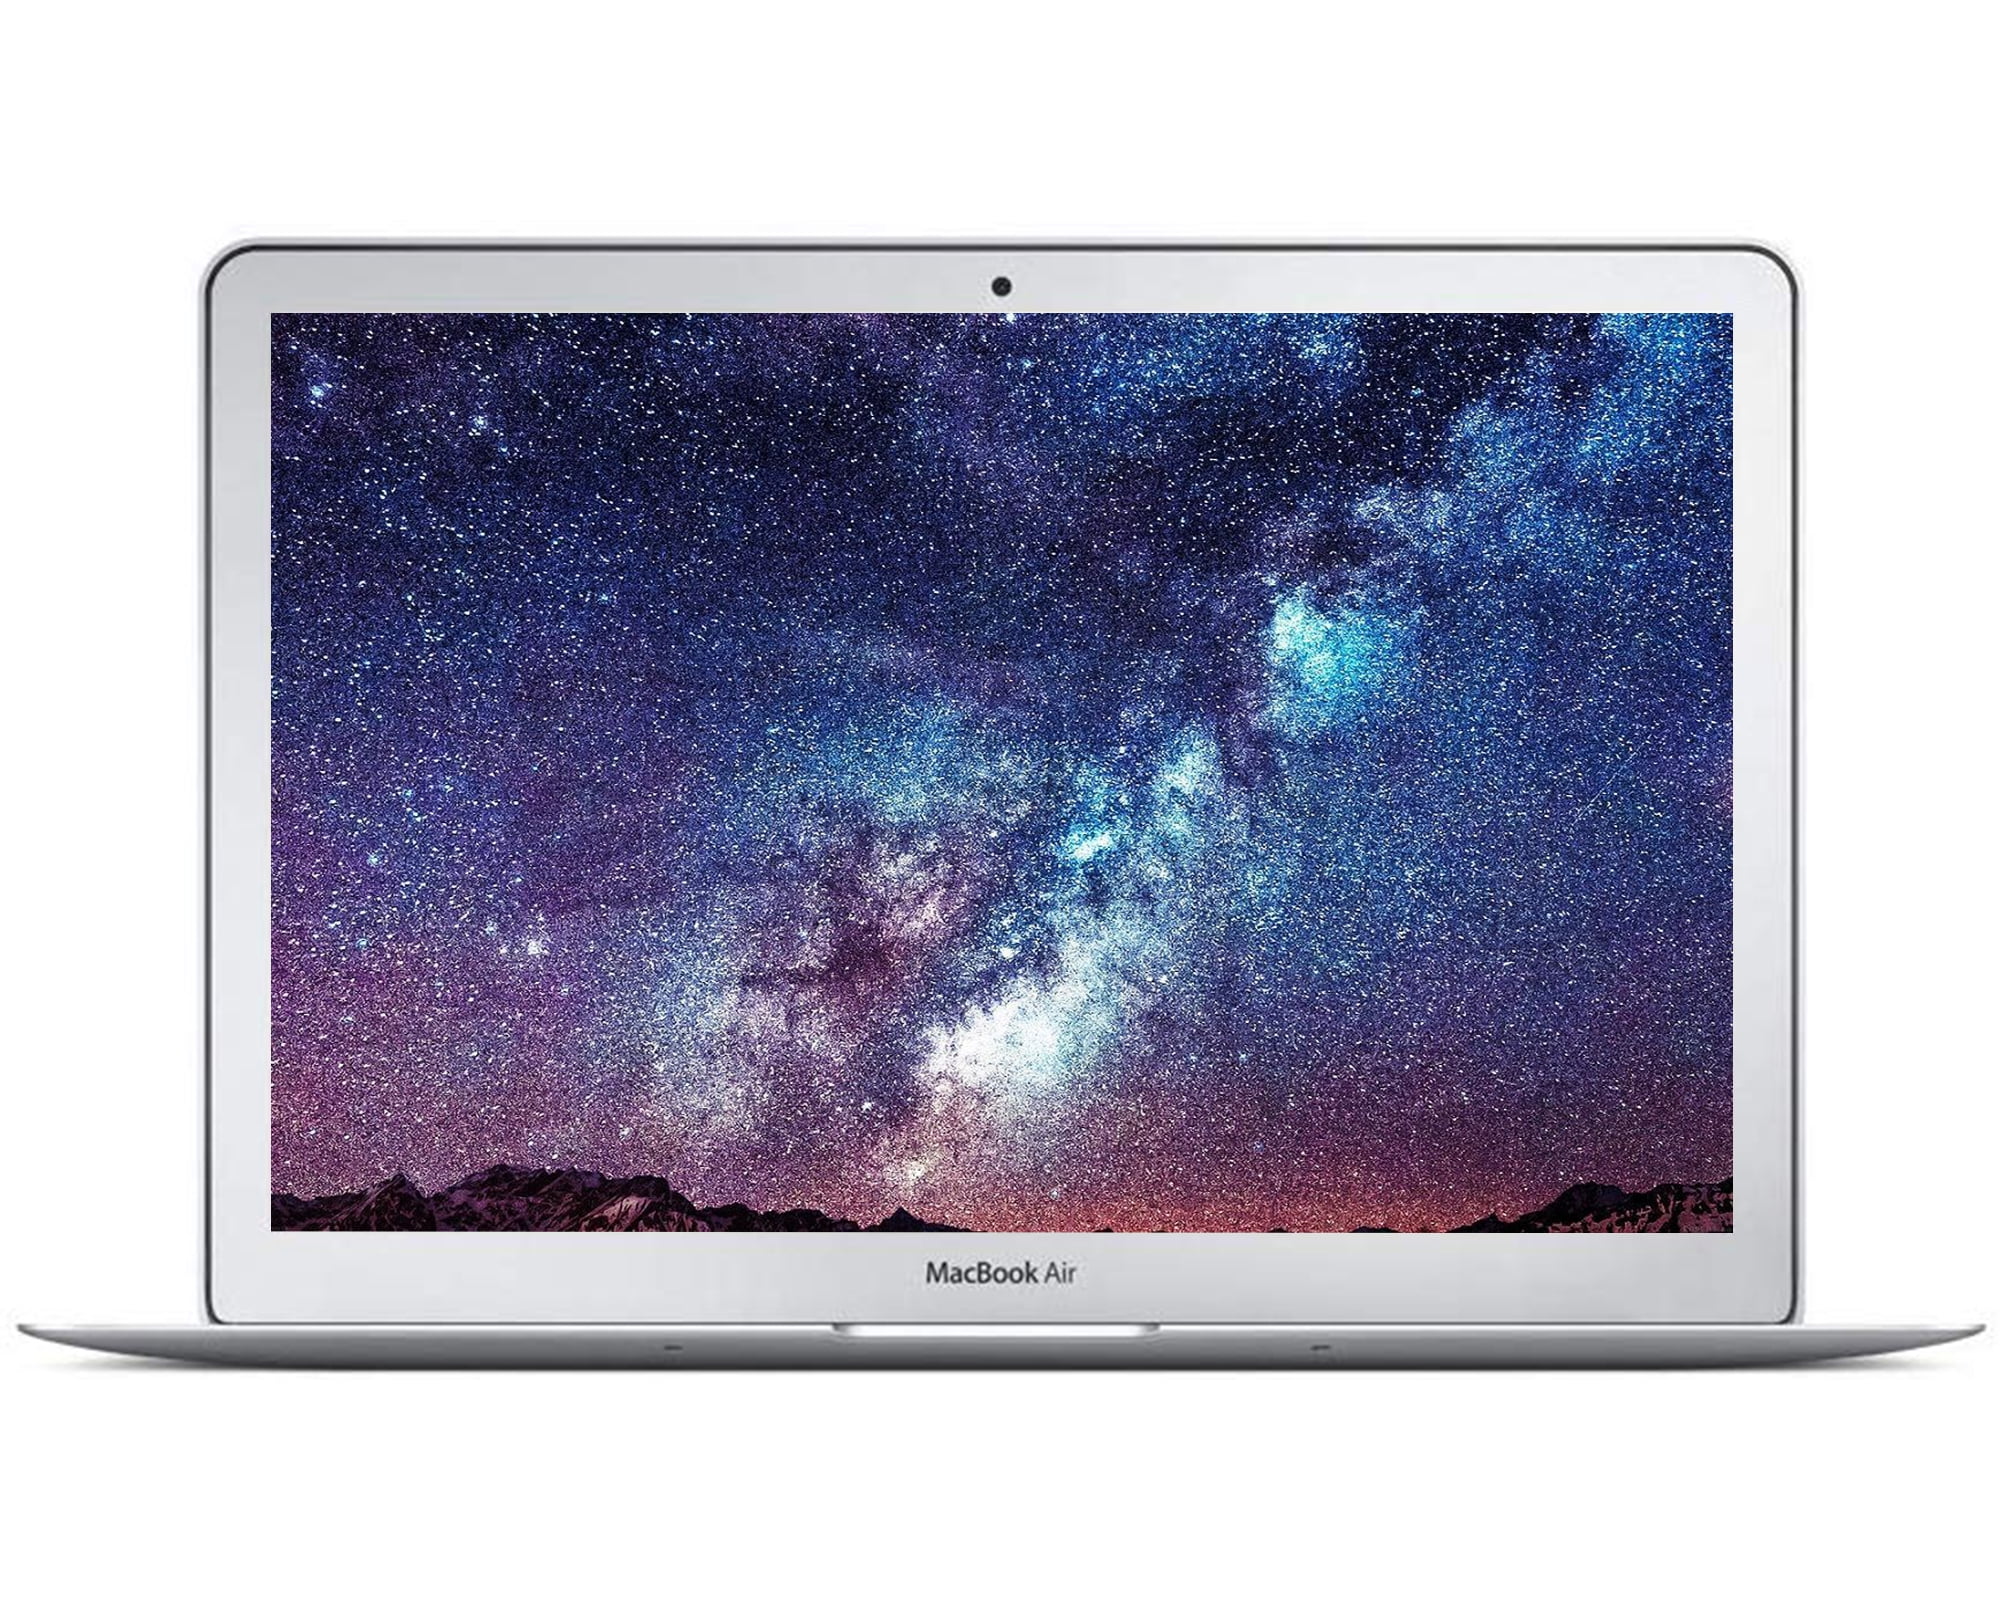 Restored Apple MacBook Air MD628LL/A Intel Core i5-3317U X2 1.7GHz 